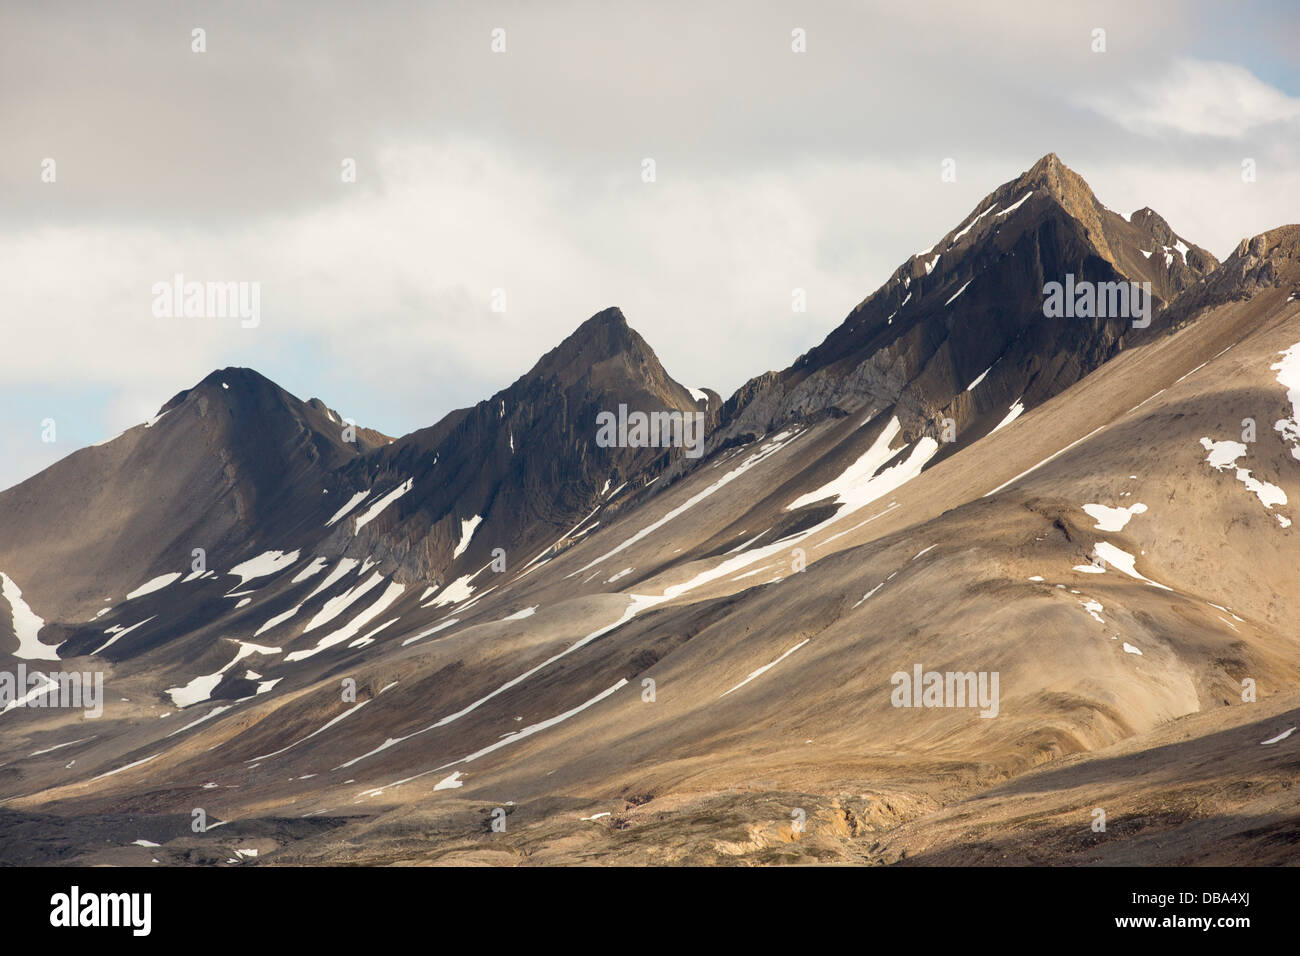 Frastagliate cime di montagna a Alkehornet 77°24'N 022°40'e; Spitsbergen Svalbard. Foto Stock